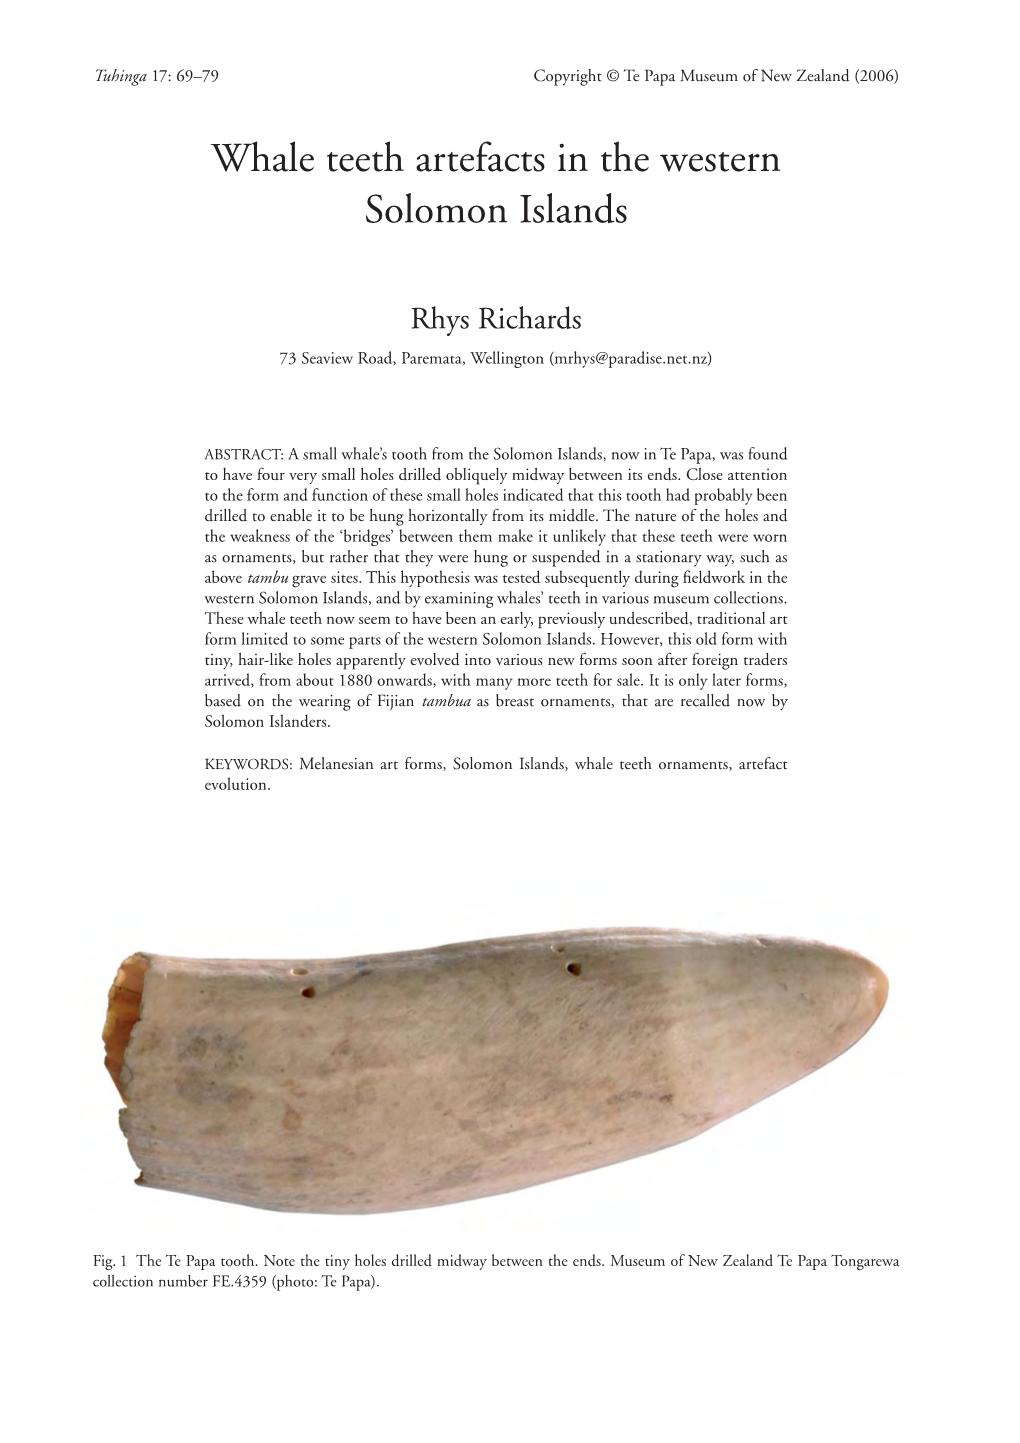 Whale Teeth Artefacts in the Western Solomon Islands